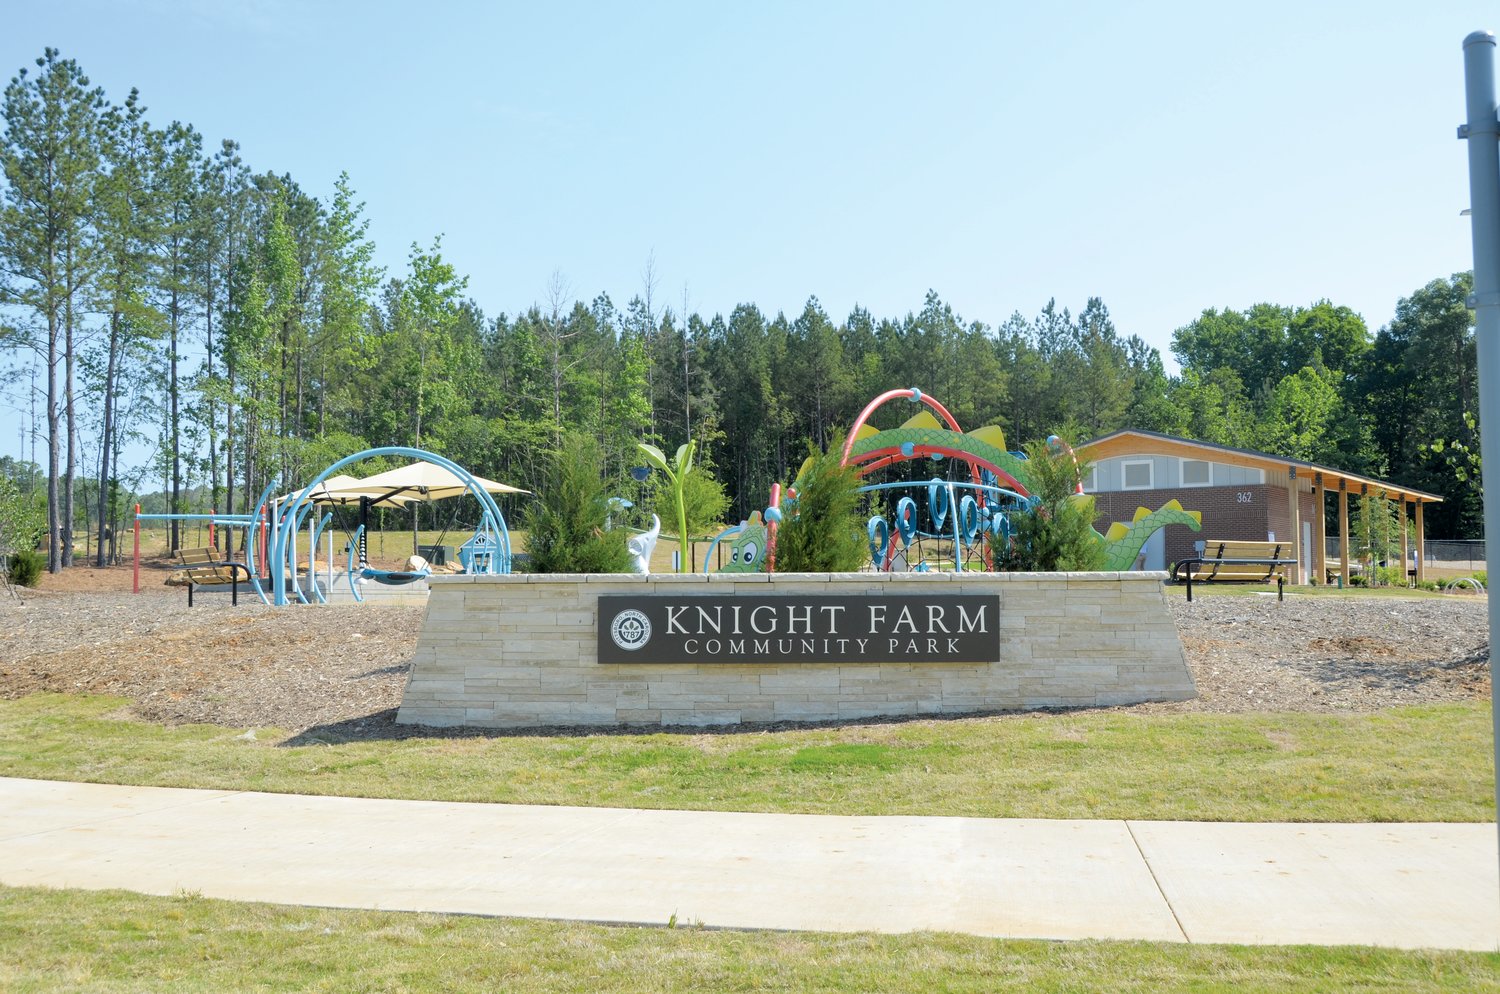 Knight Farm Community Park in Pittsboro